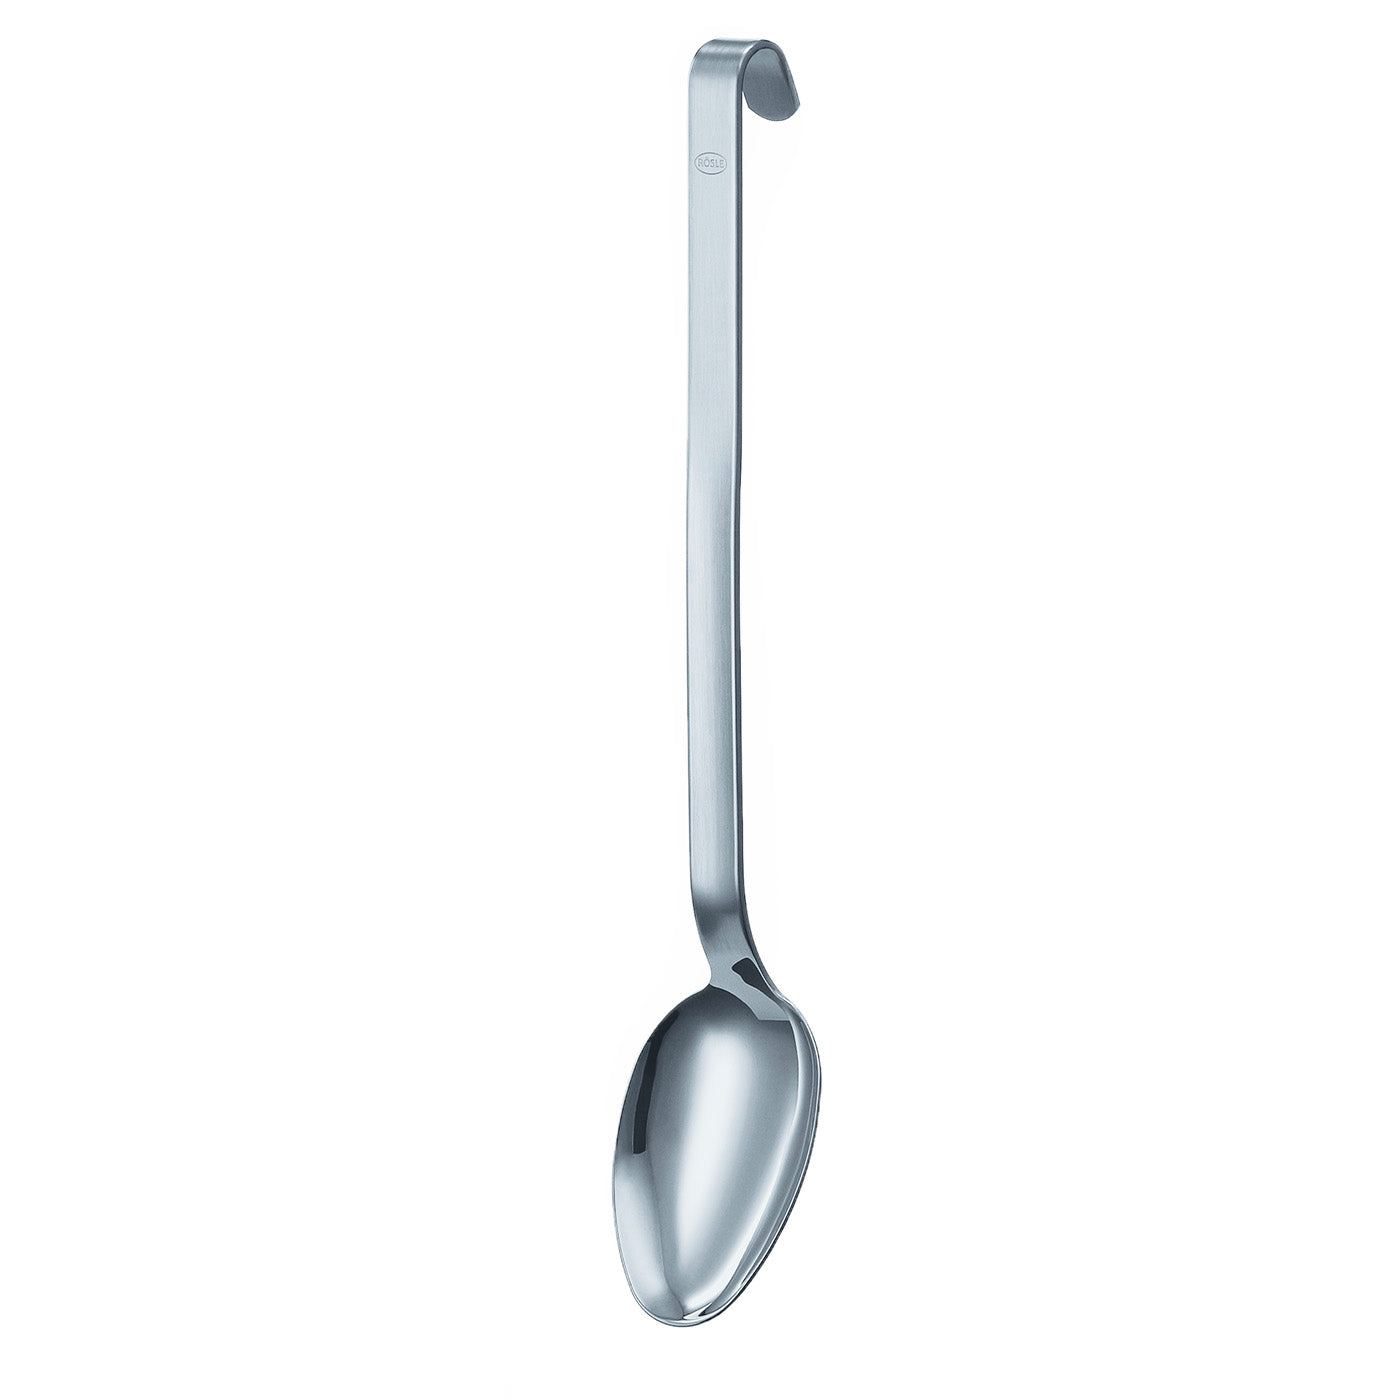 Rosle Stainless Steel 12.4 Inch Basting Spoon